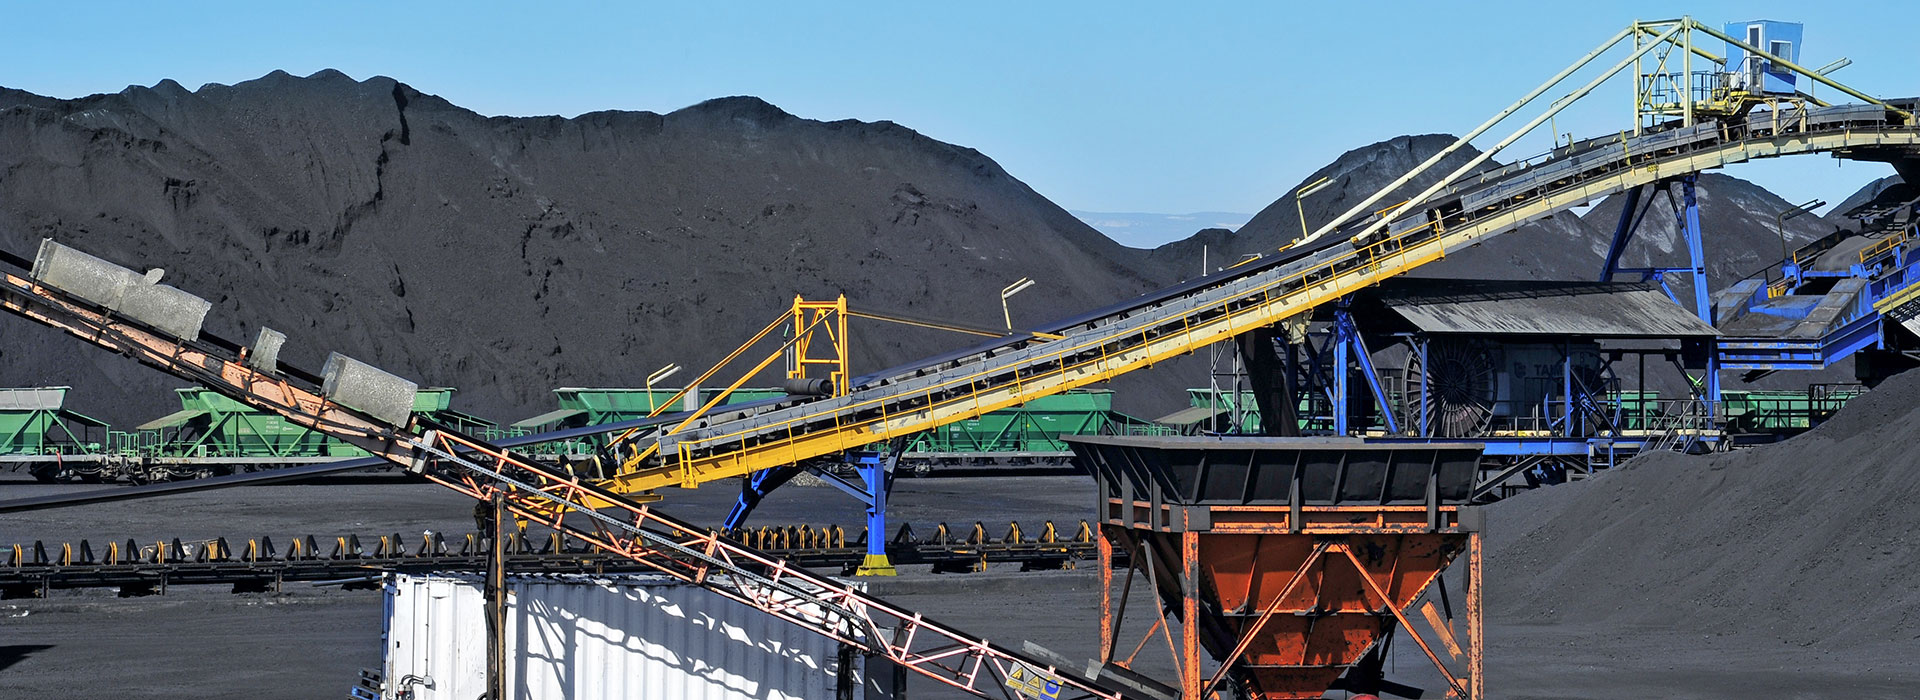 Mining Coal Industry